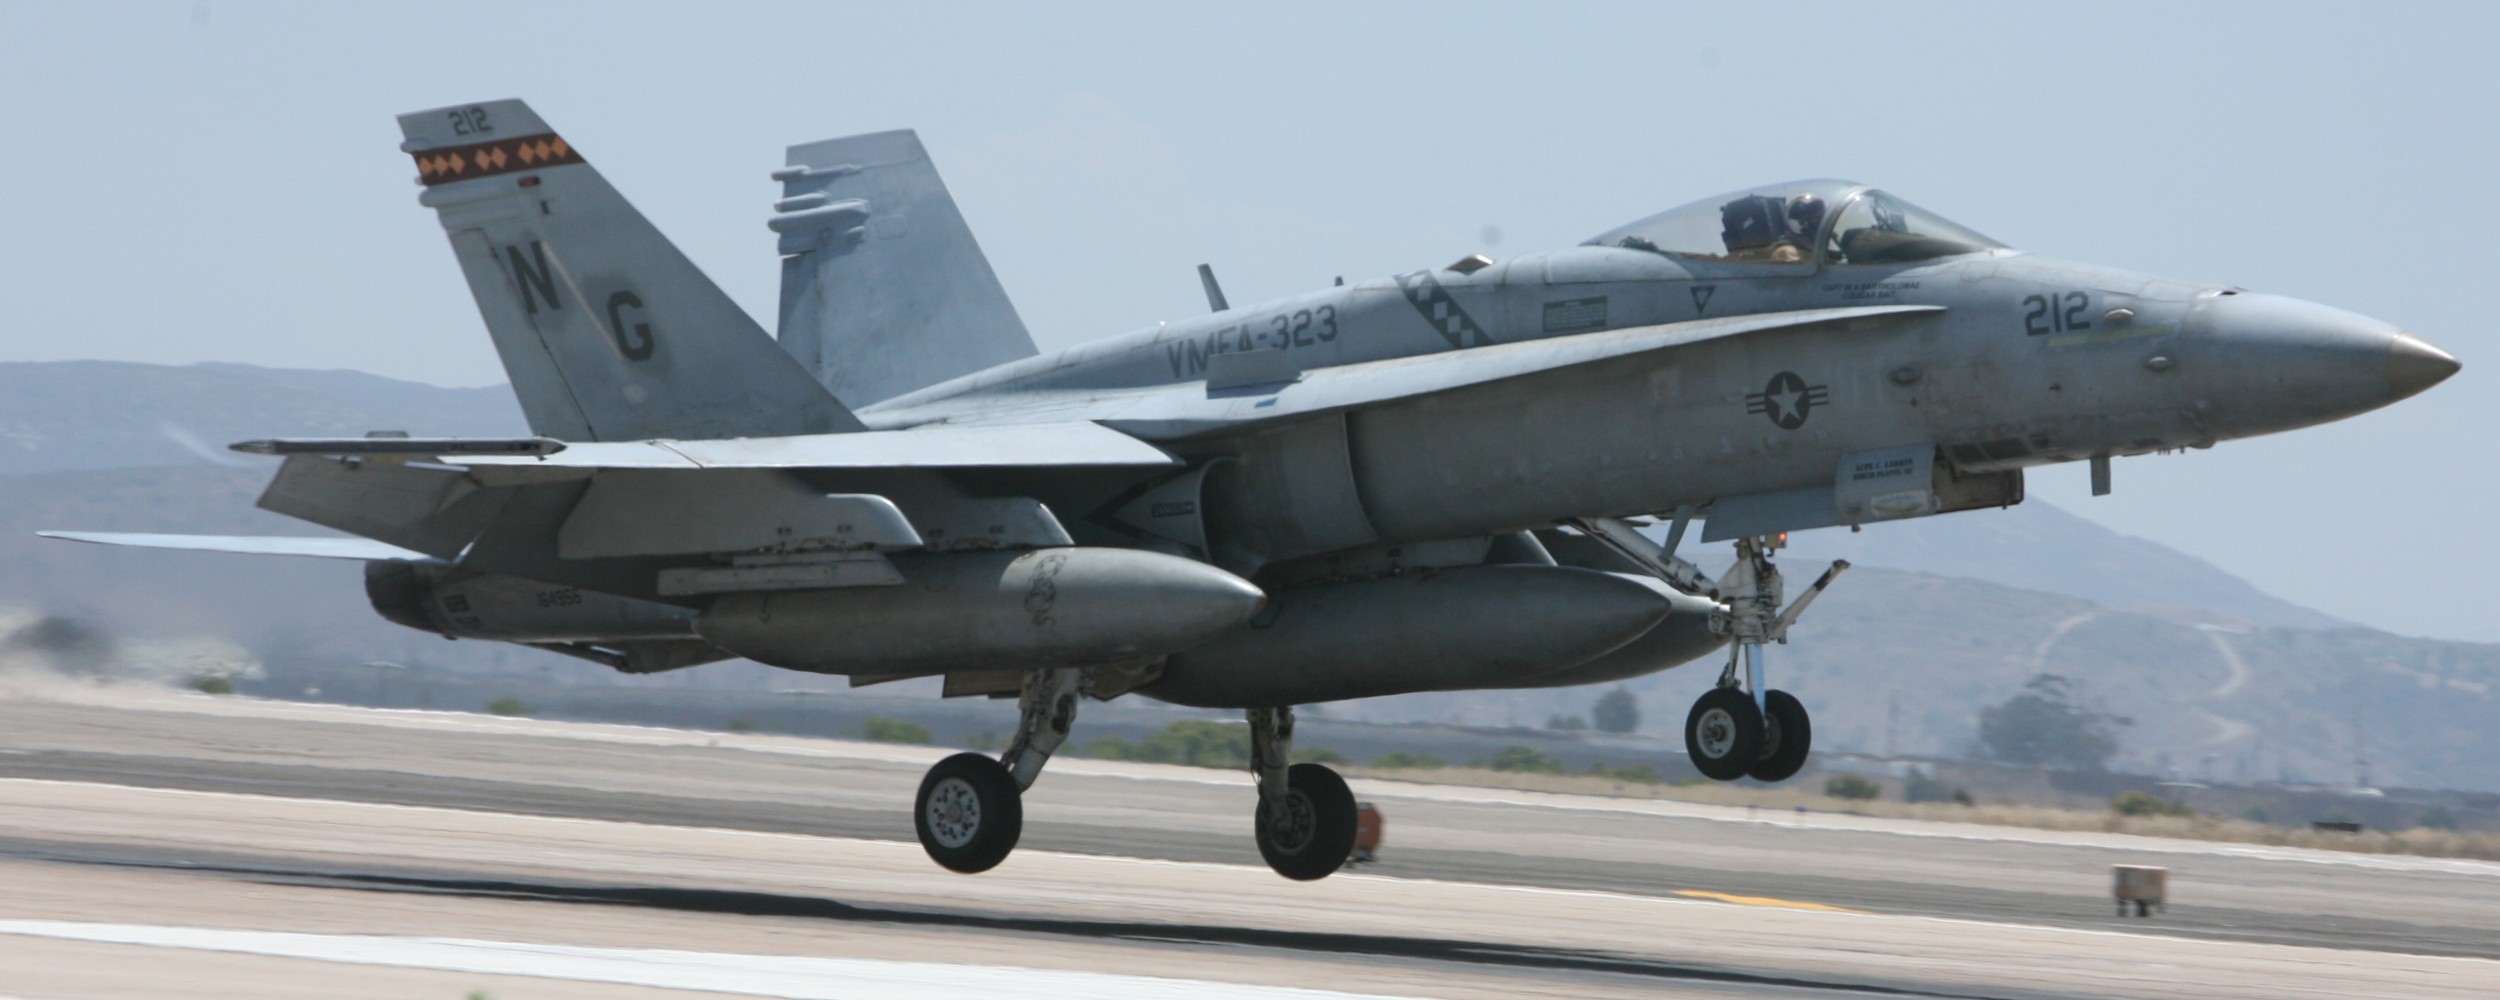 vmfa-323 death rattlers marine fighter attack squadron f/a-18c hornet 135 mcas miramar california